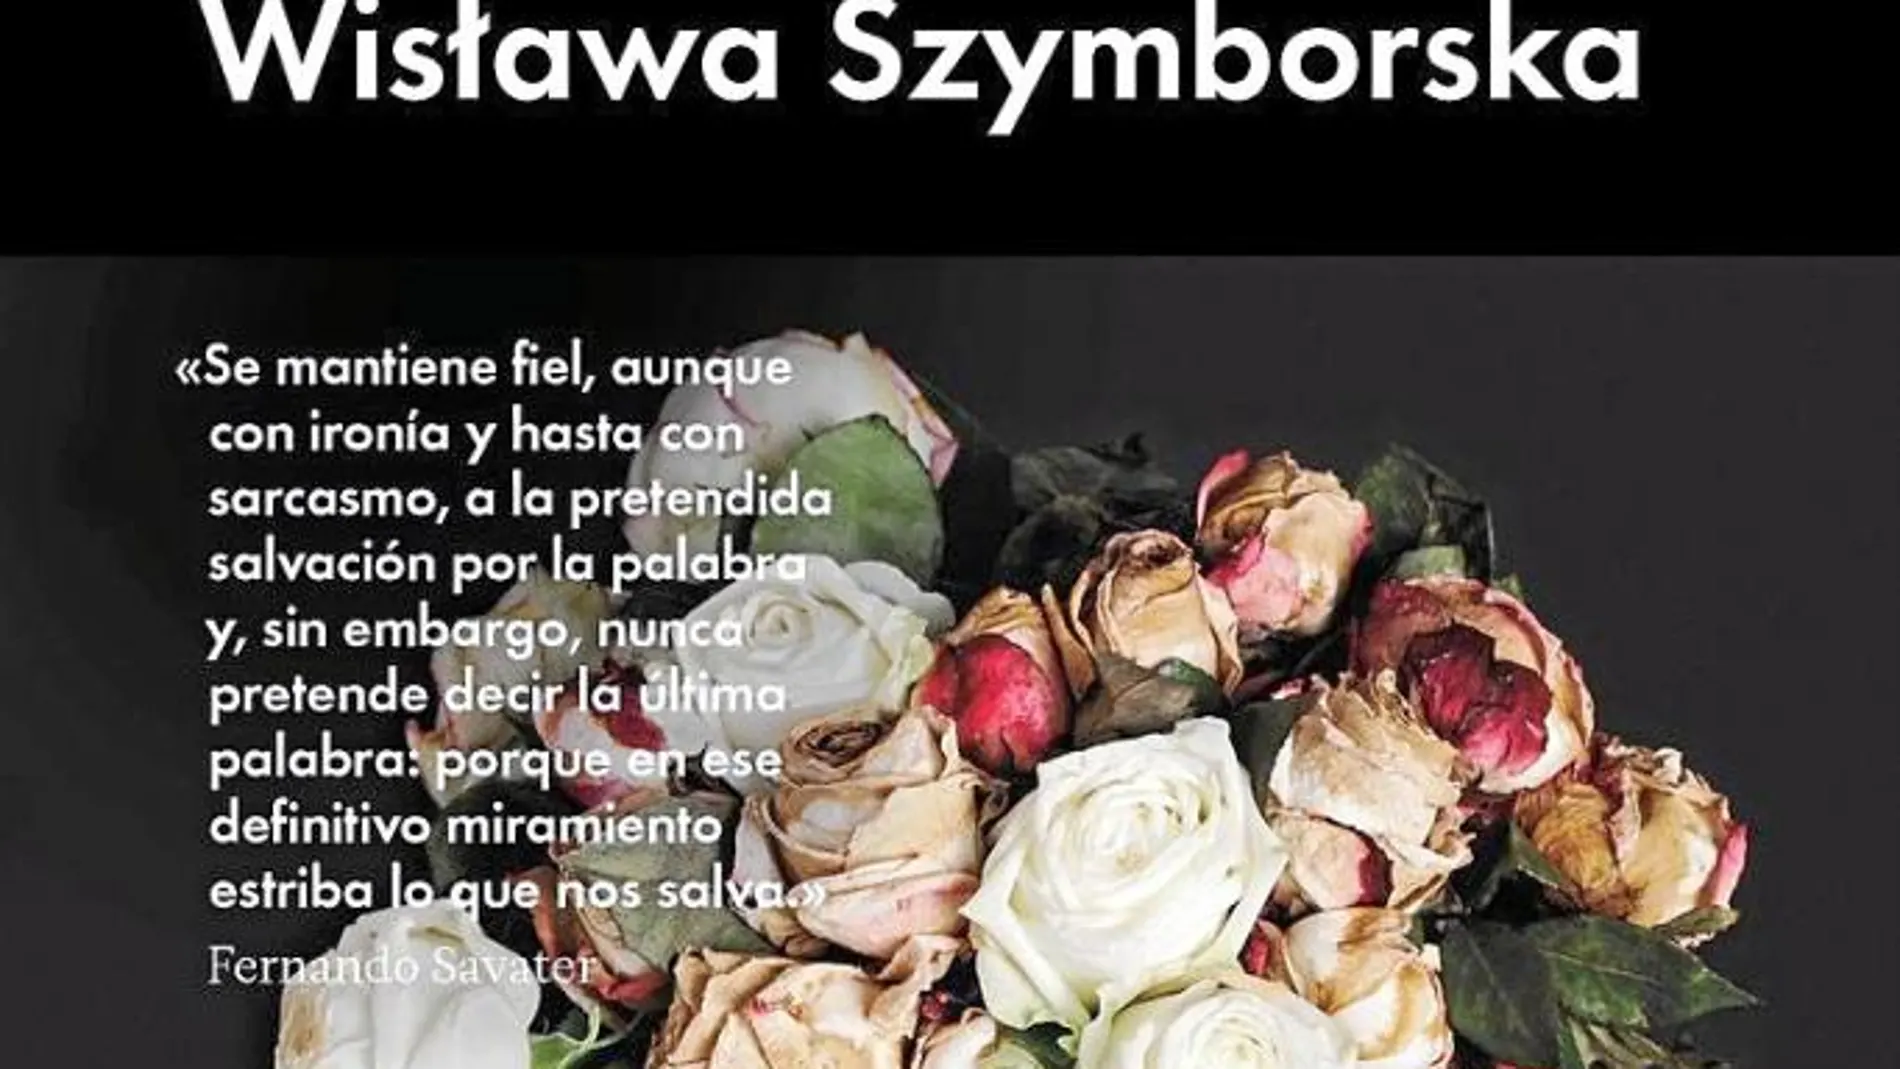 La más traviesa Szymborska